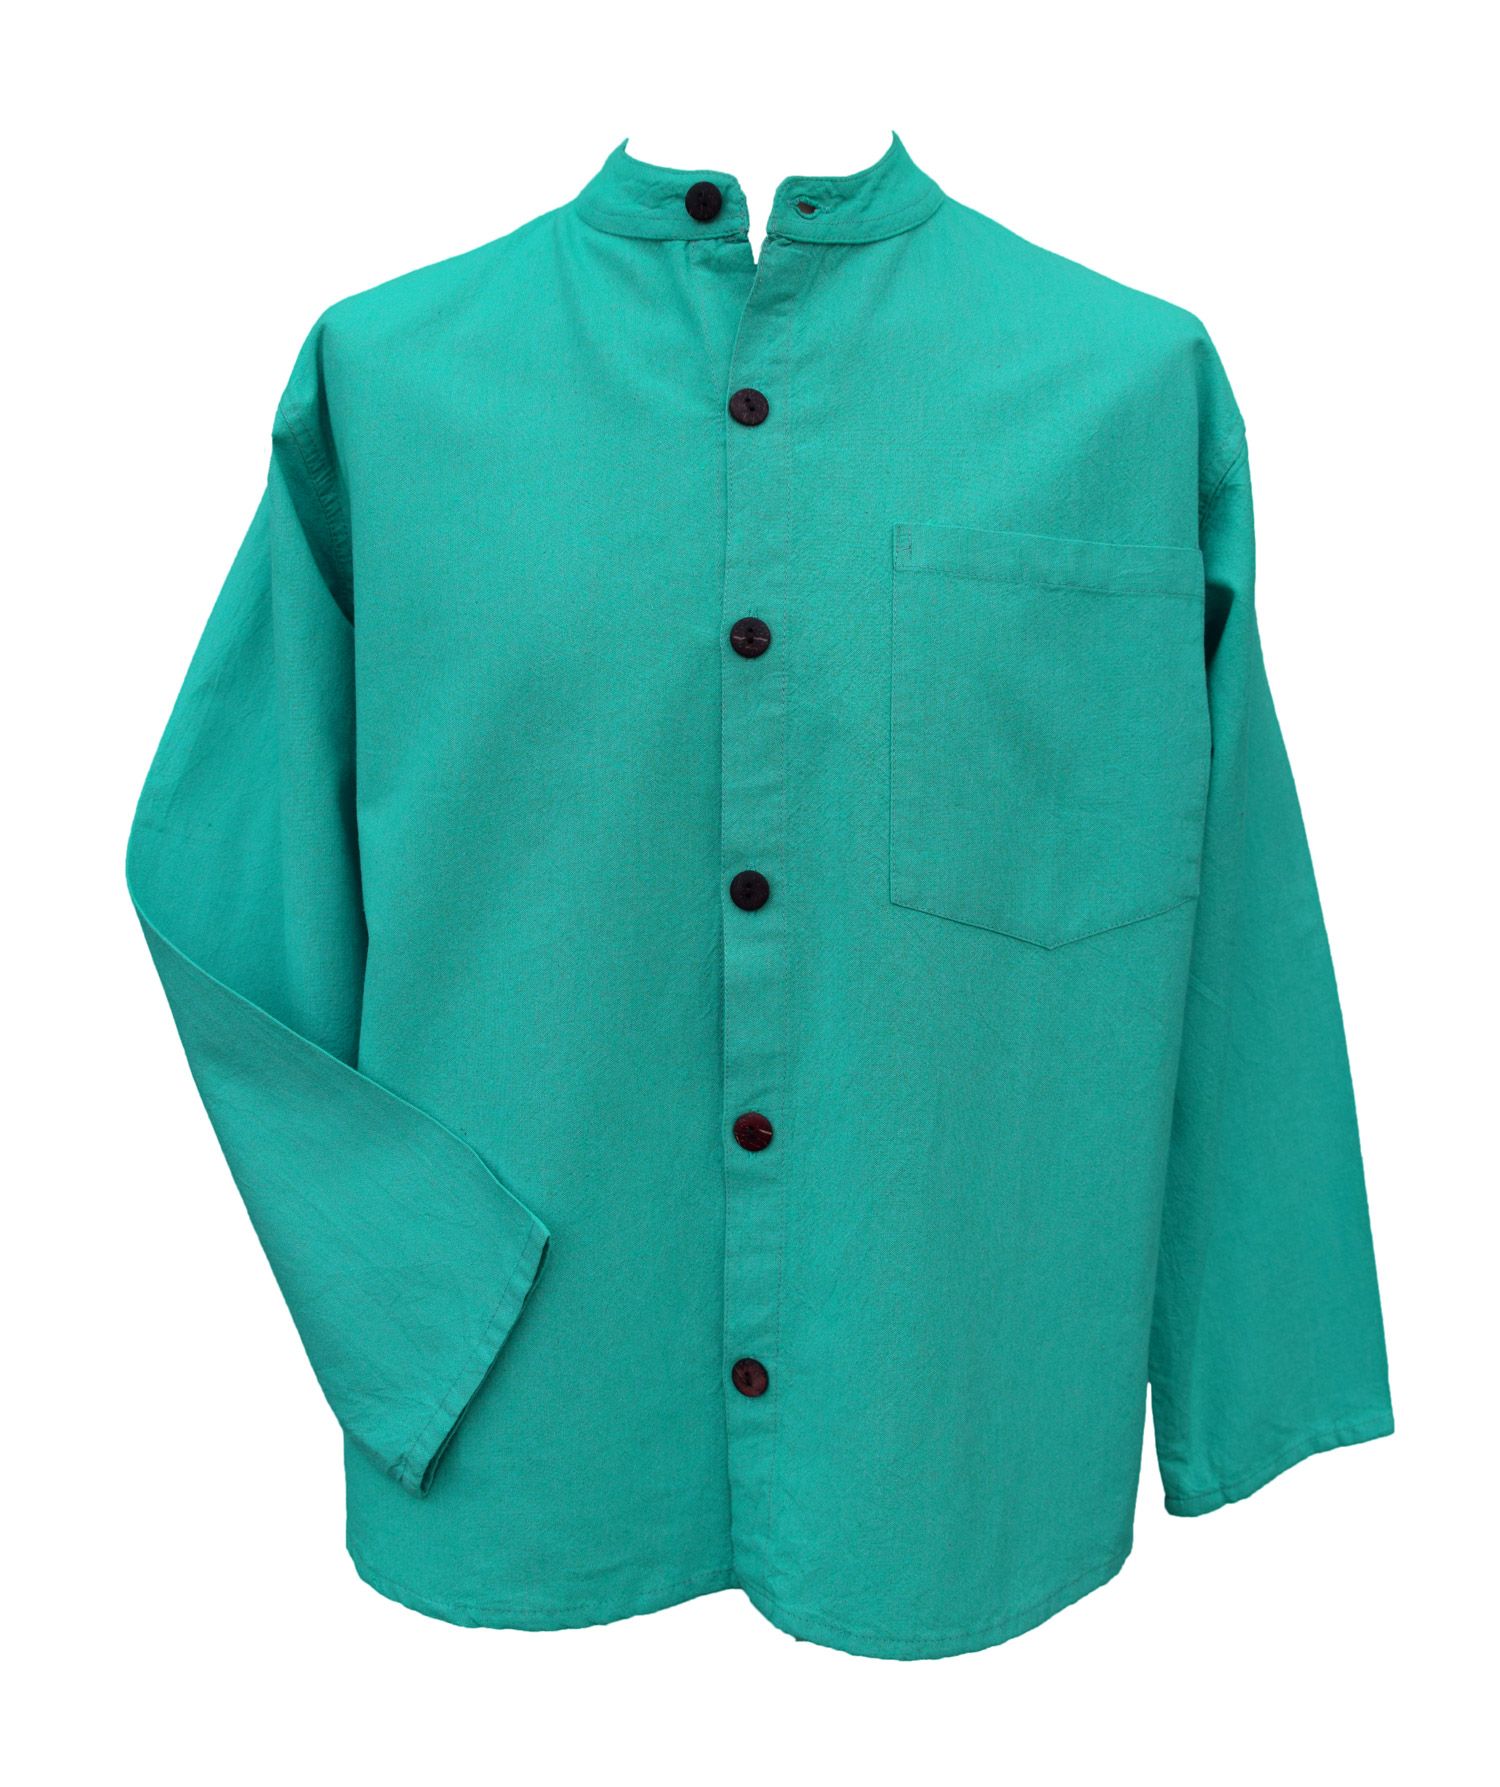 Full buttoned - plain shirt - turquoise/blue | Black Yak